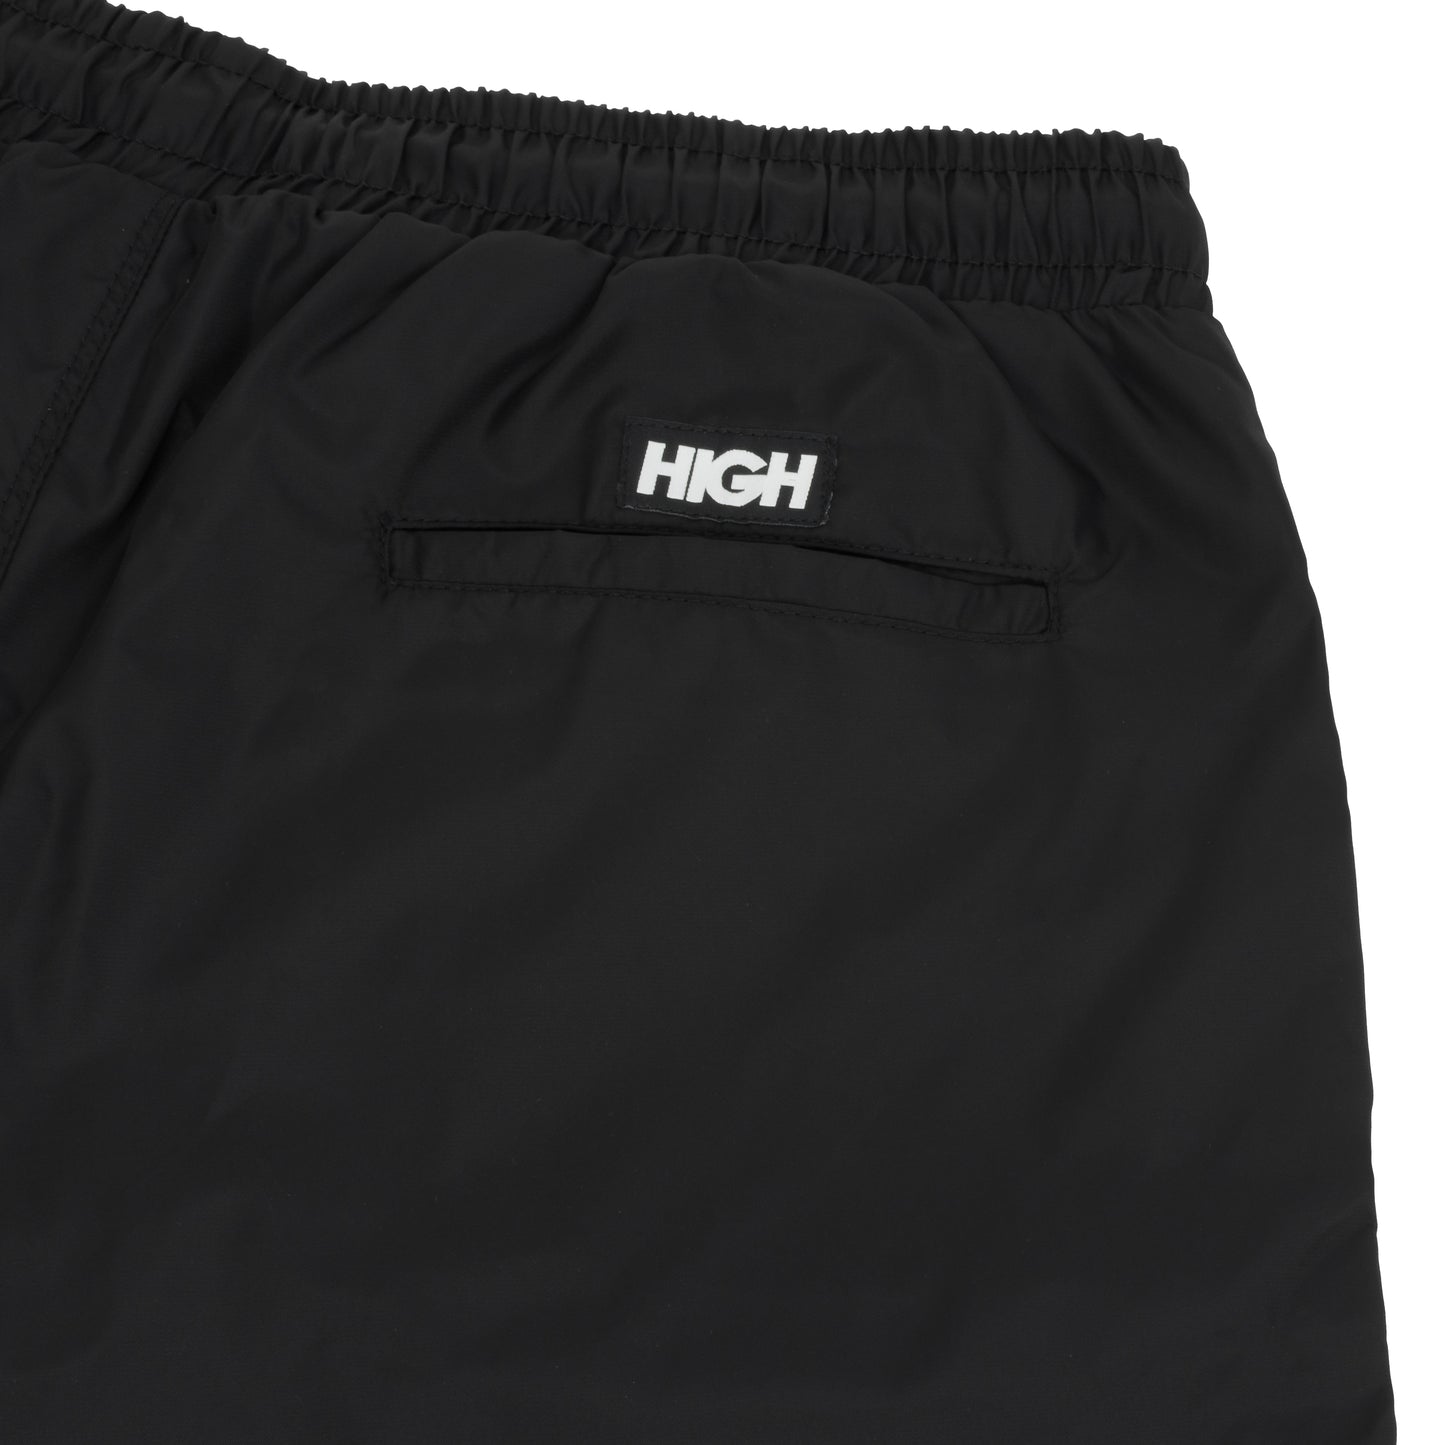 HIGH - Sportshorts Black